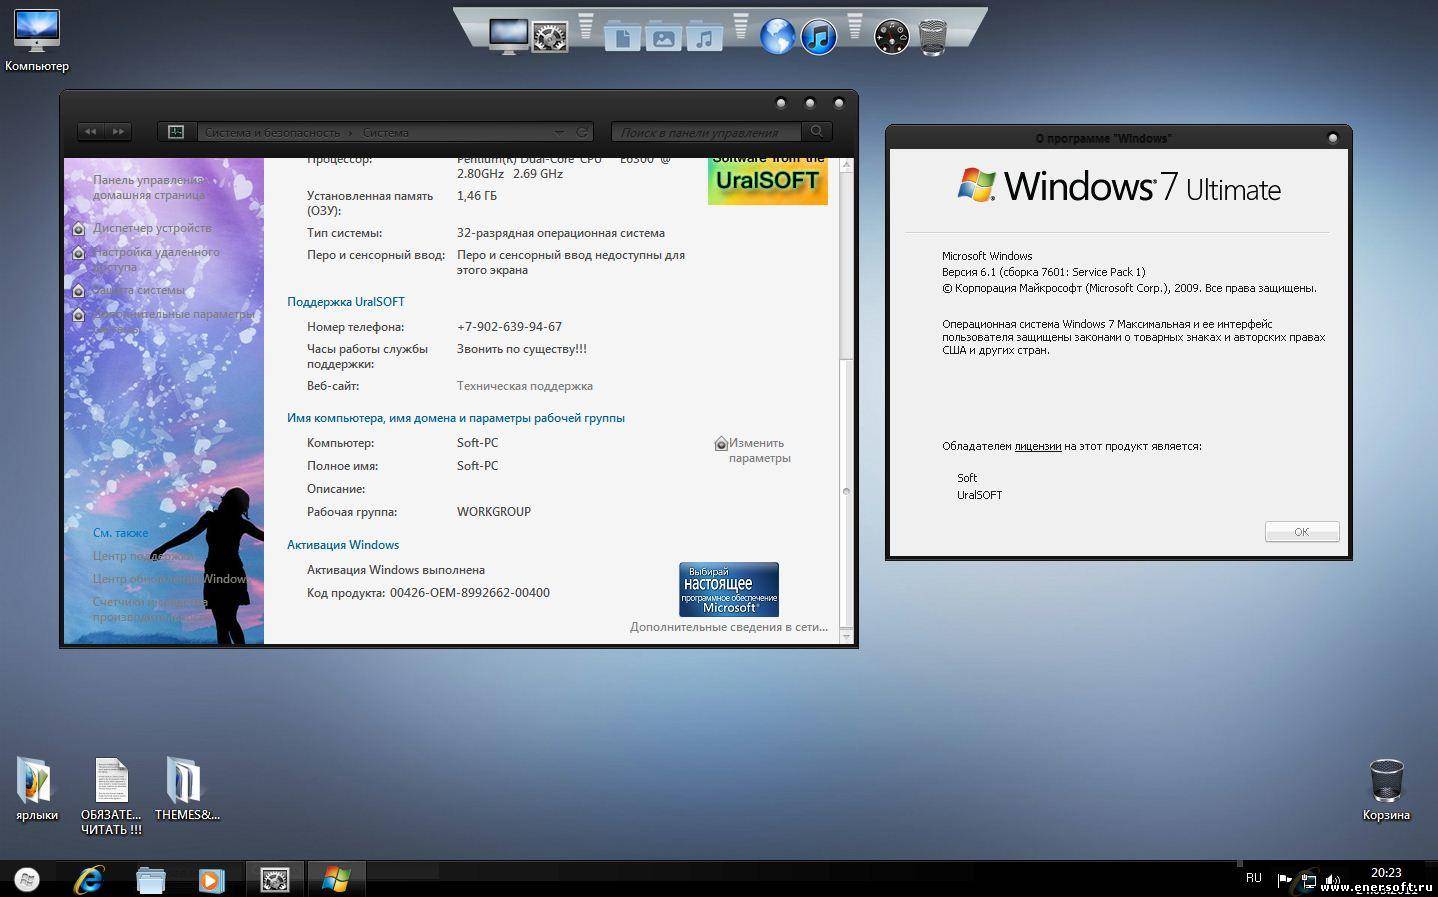 Активатор 7 сборка 7601. Windows 7 Ultimate. Windows 7 Ultimate URALSOFT. Виндовс 7 уралсофт 2011. Виндовс 7 уралсофт SP 1.